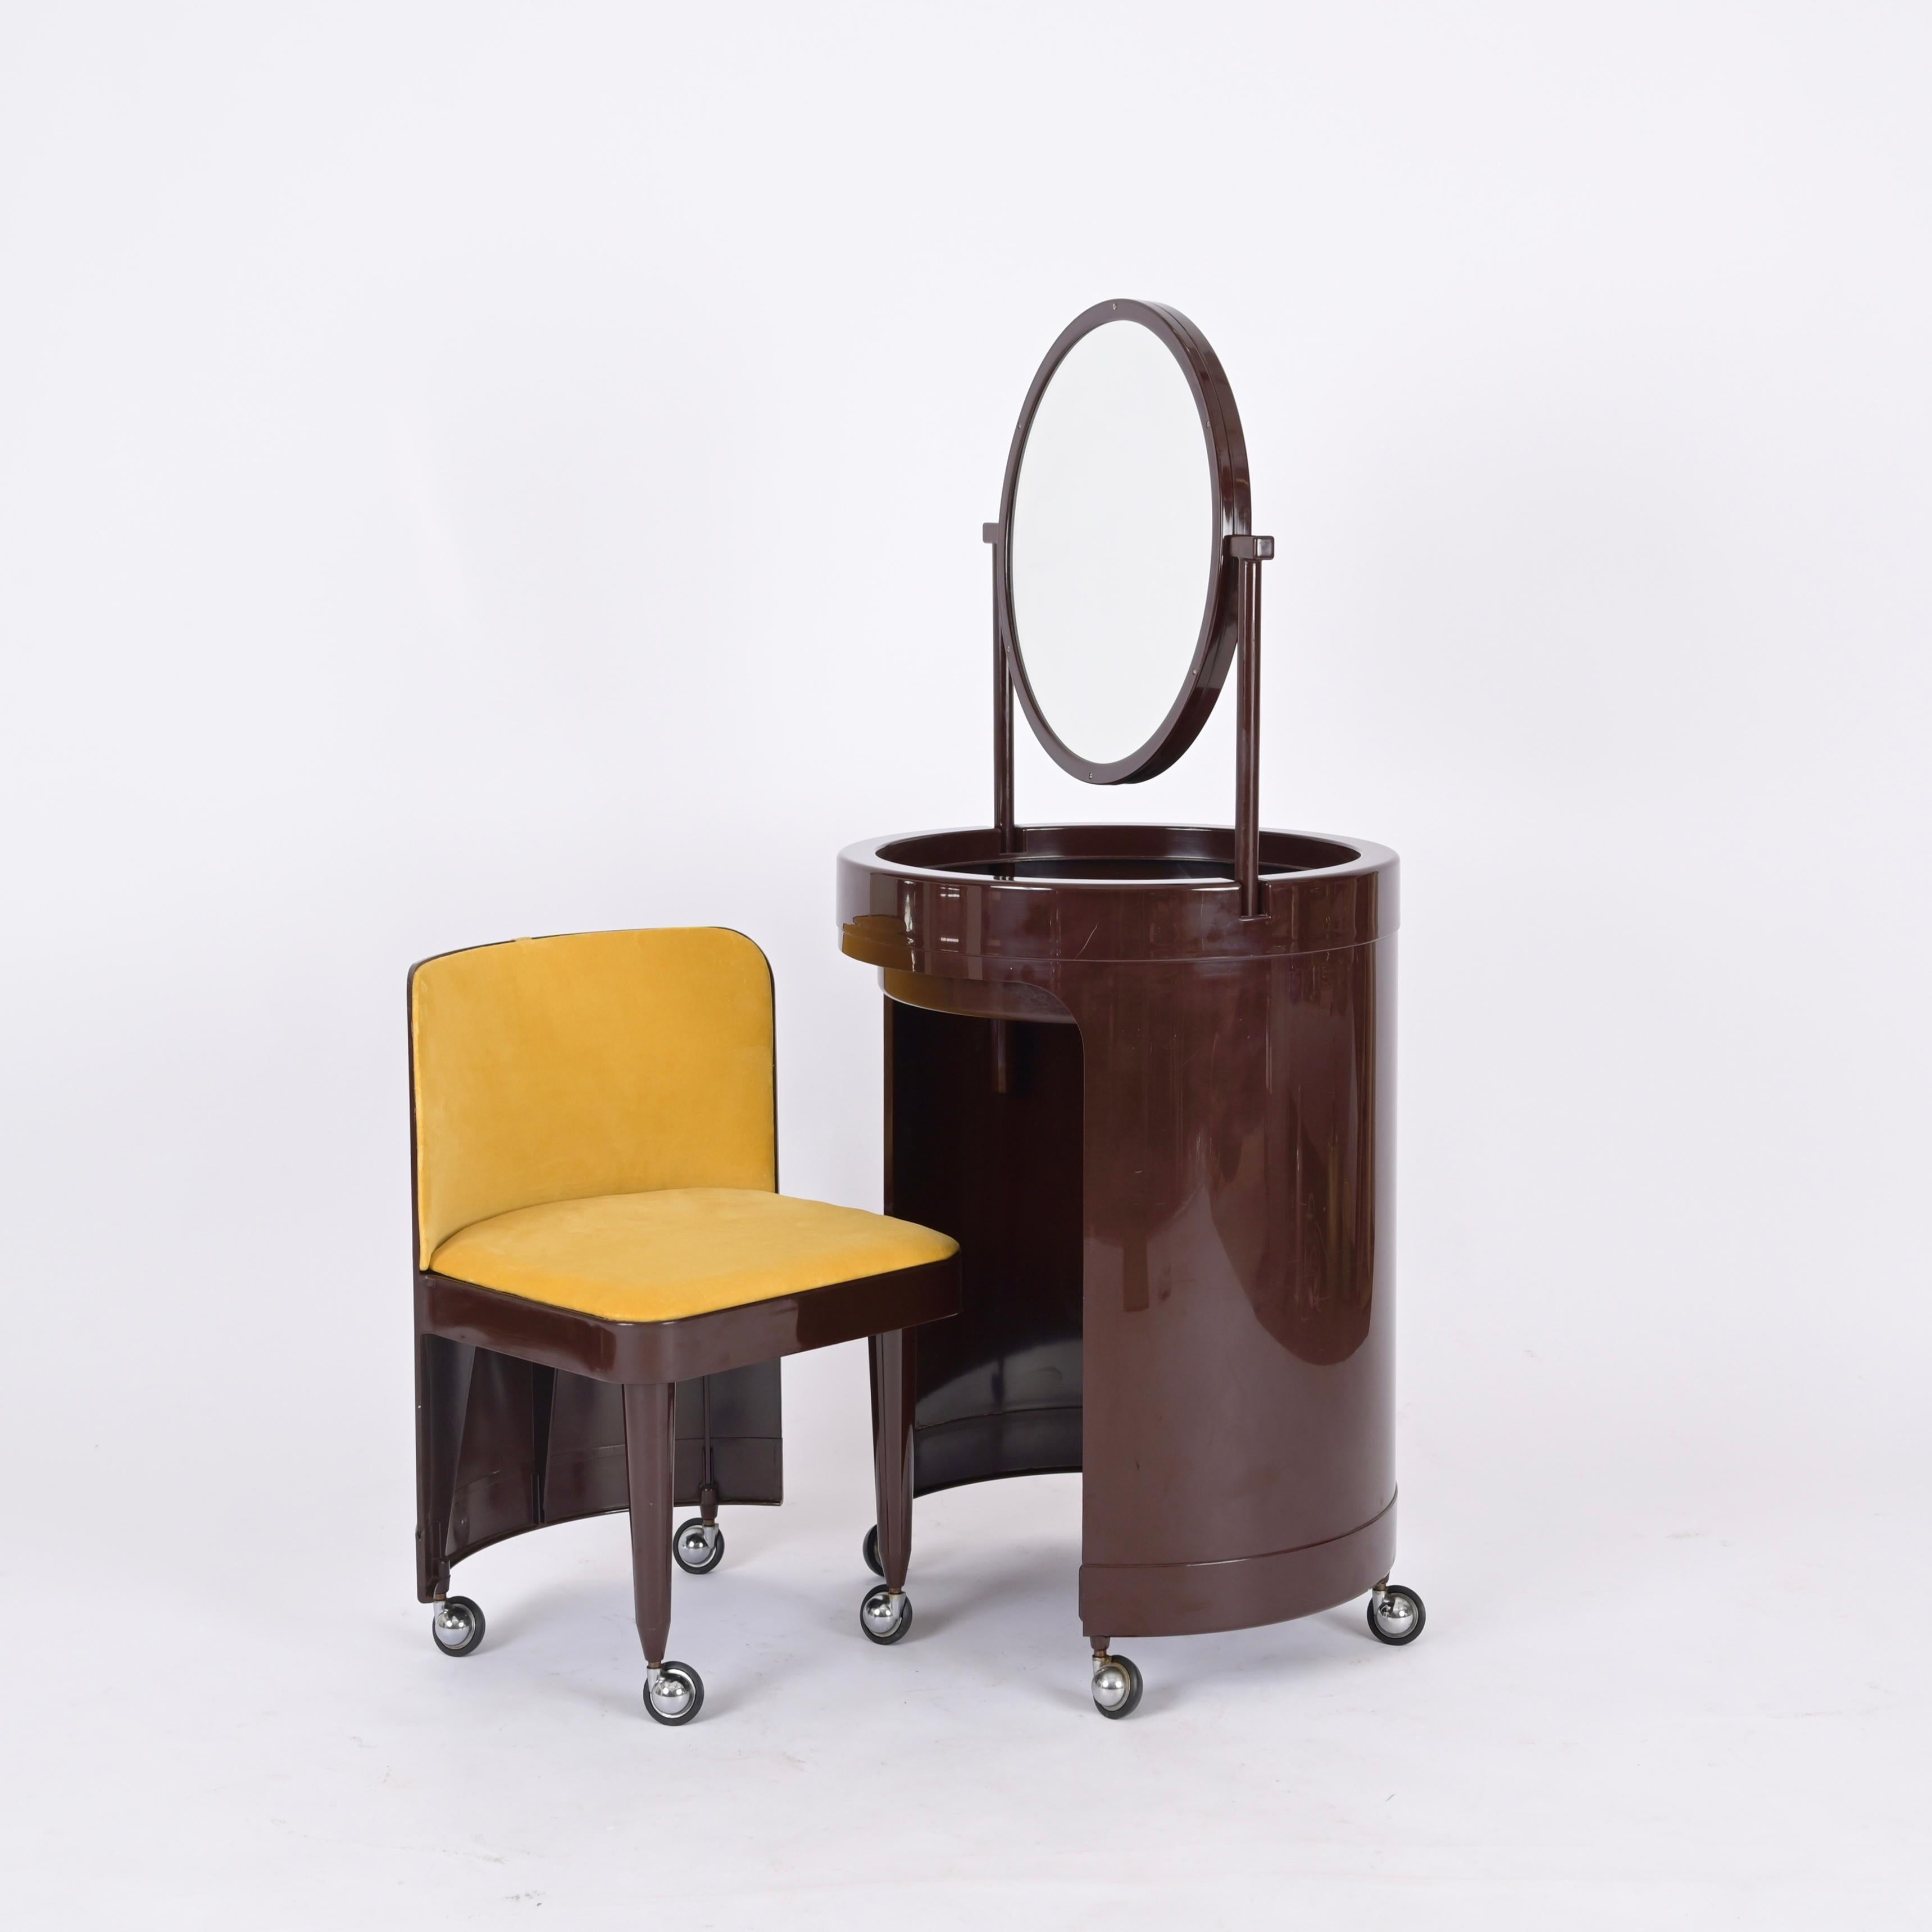 Fin du 20e siècle Studio Kastilia Silvi, table de toilette italienne Brown avec siège jaune, 1970 en vente